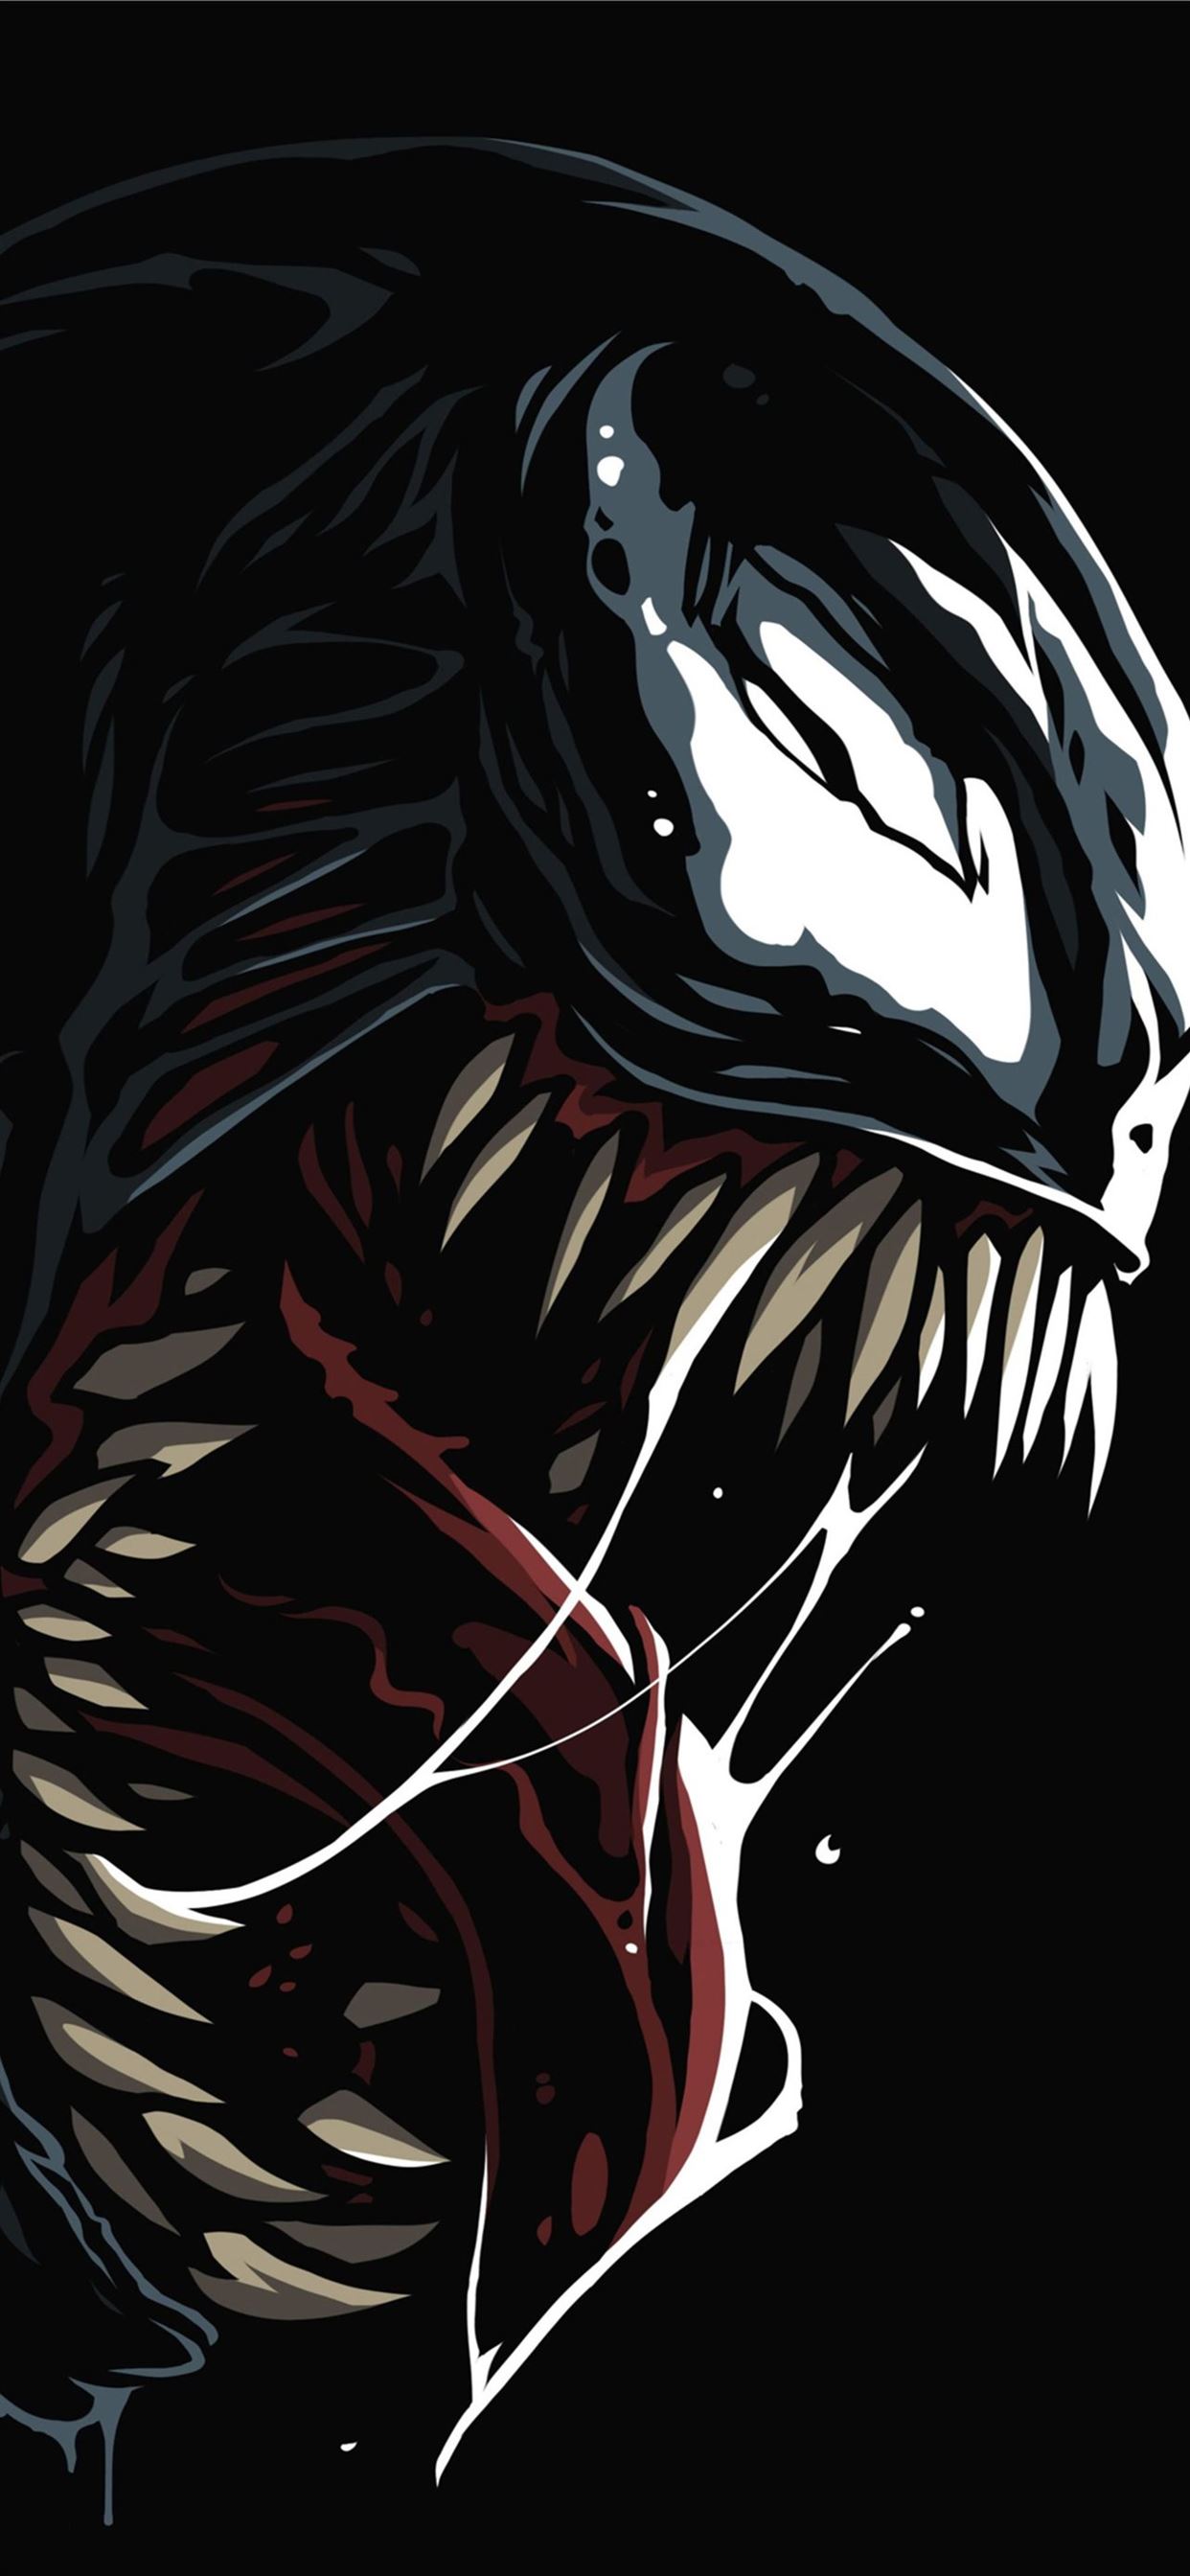 Venom Amoled 4k In Resolution iPhone Wallpaper Free Download